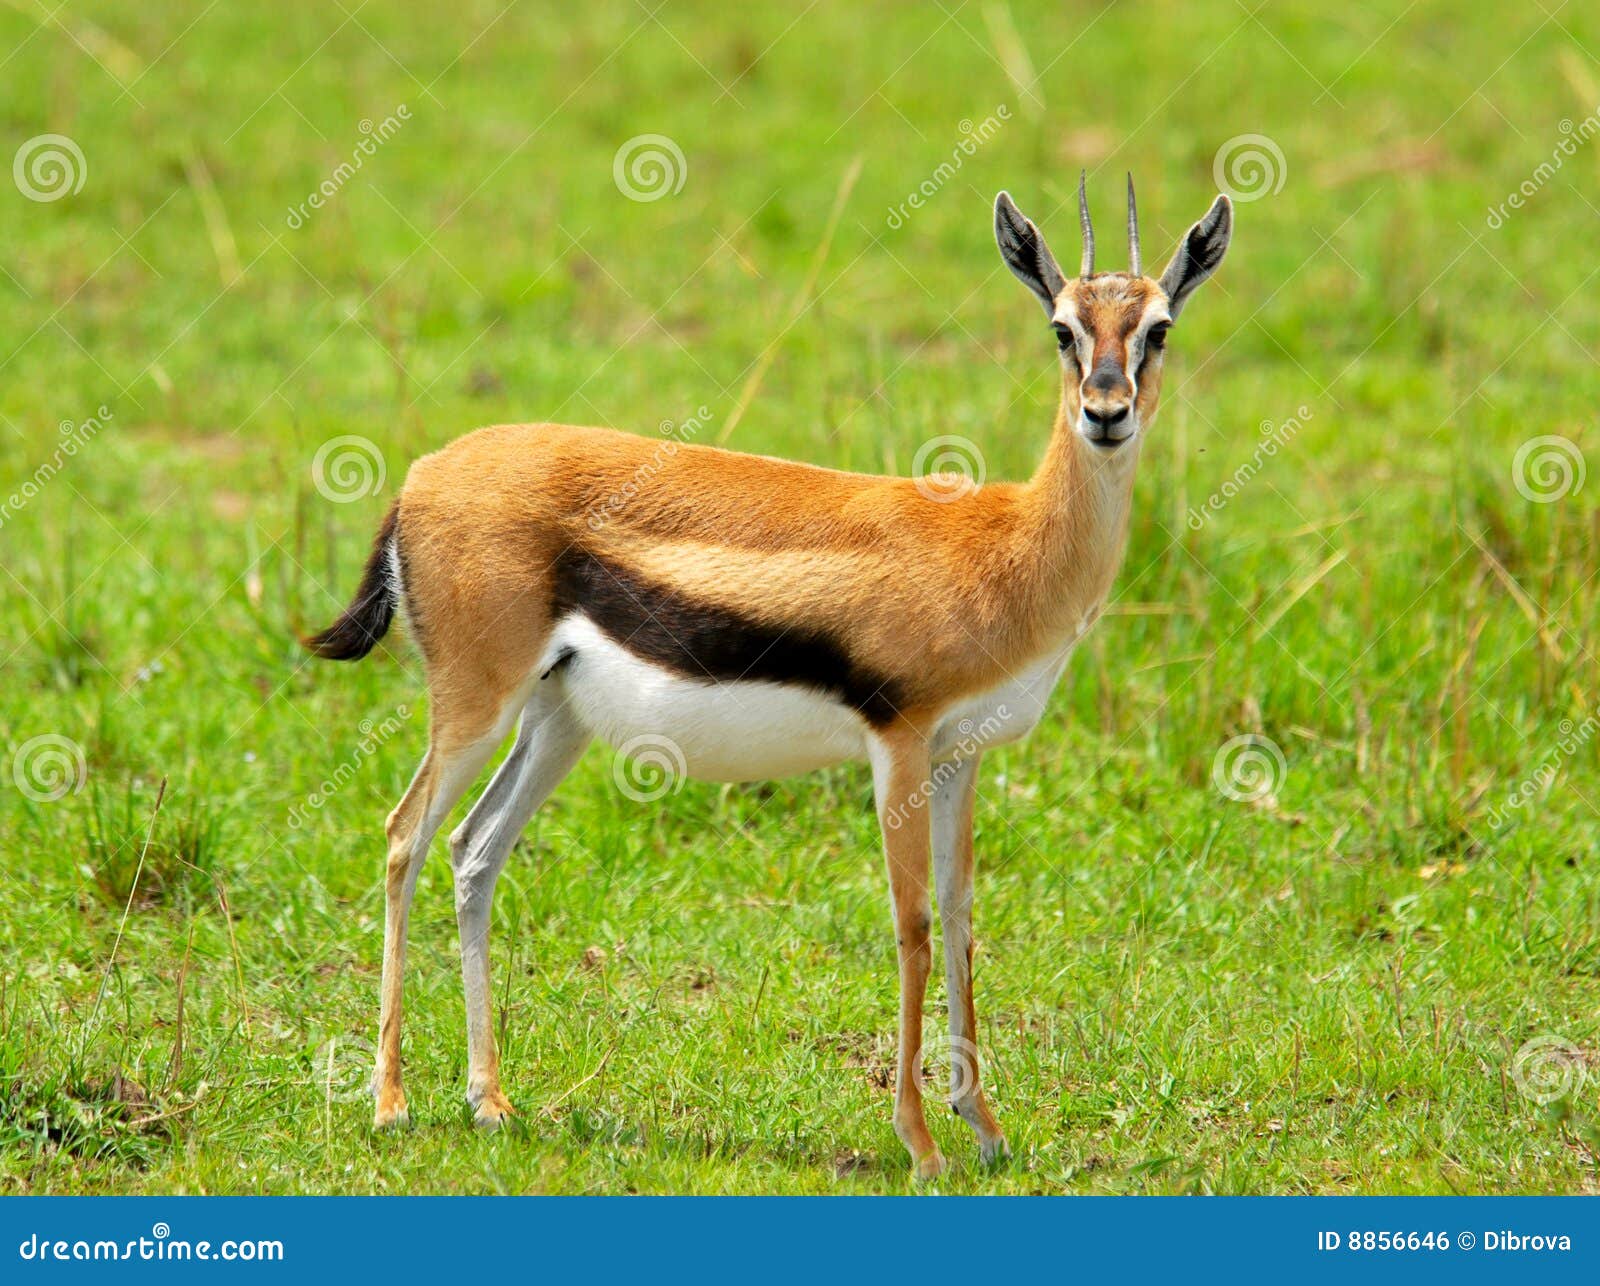 female thomson gazelle